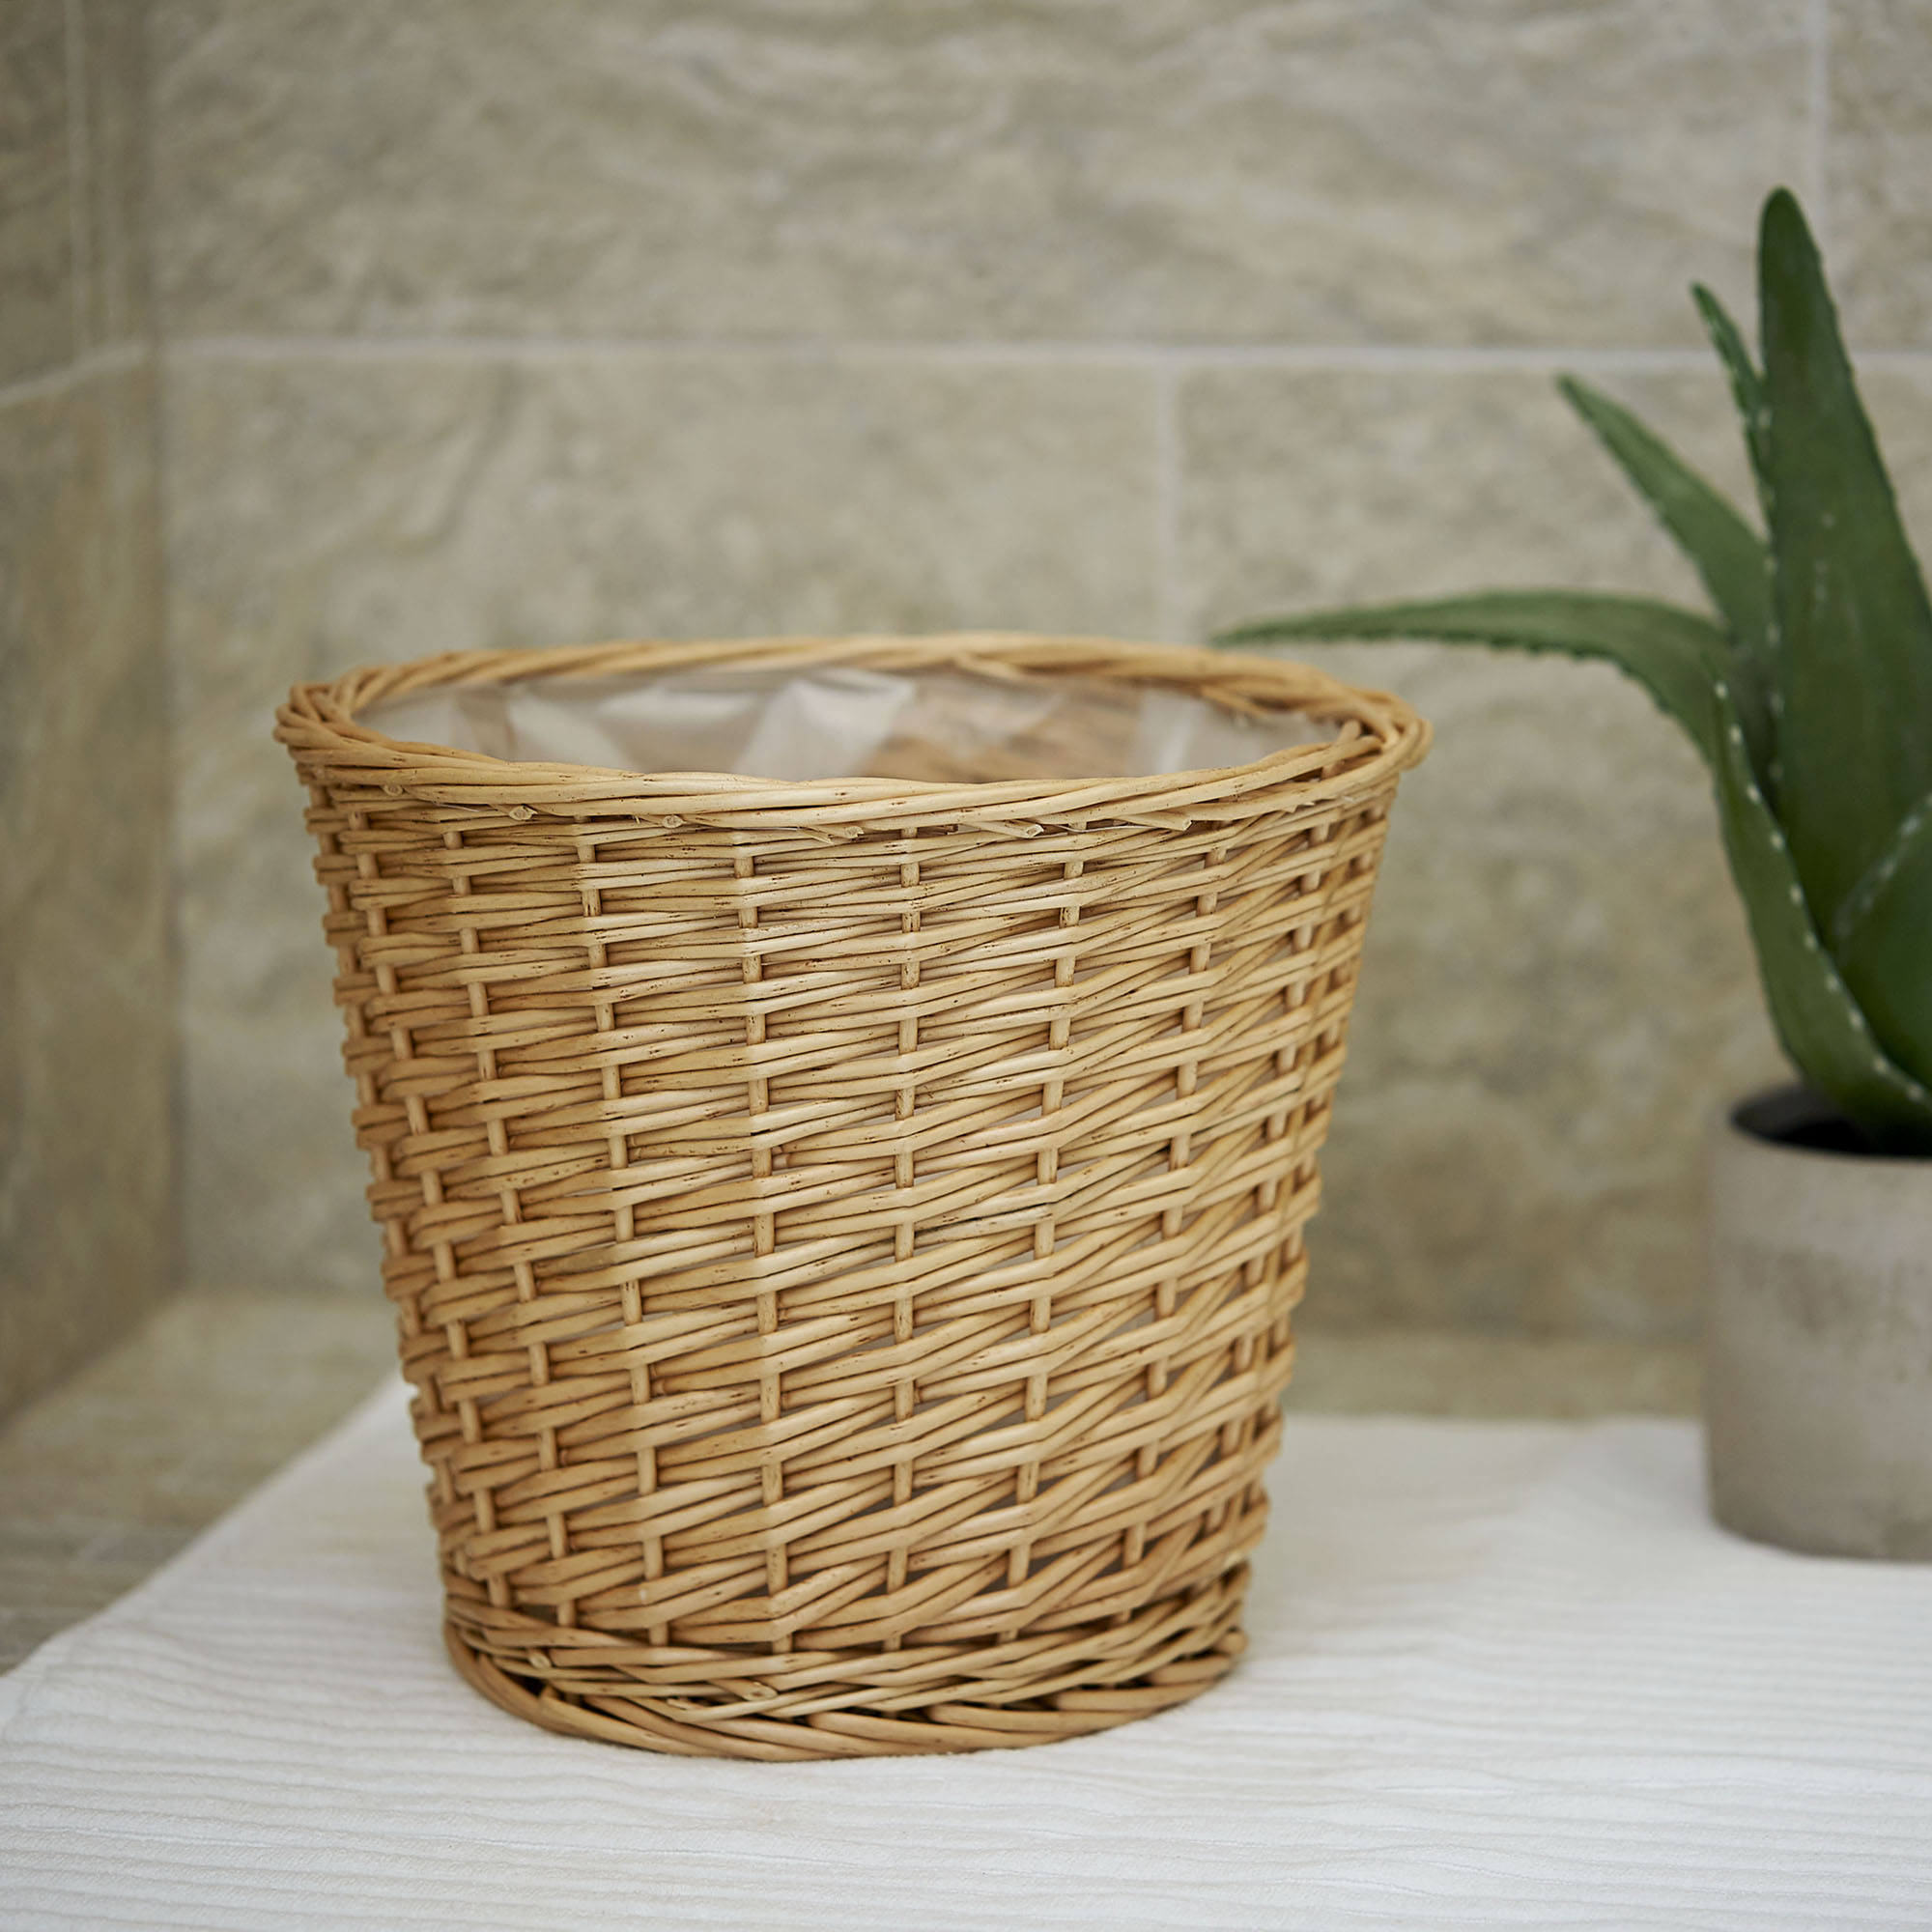 Household Essentials Medium Willow Waste Basket - image 5 of 5